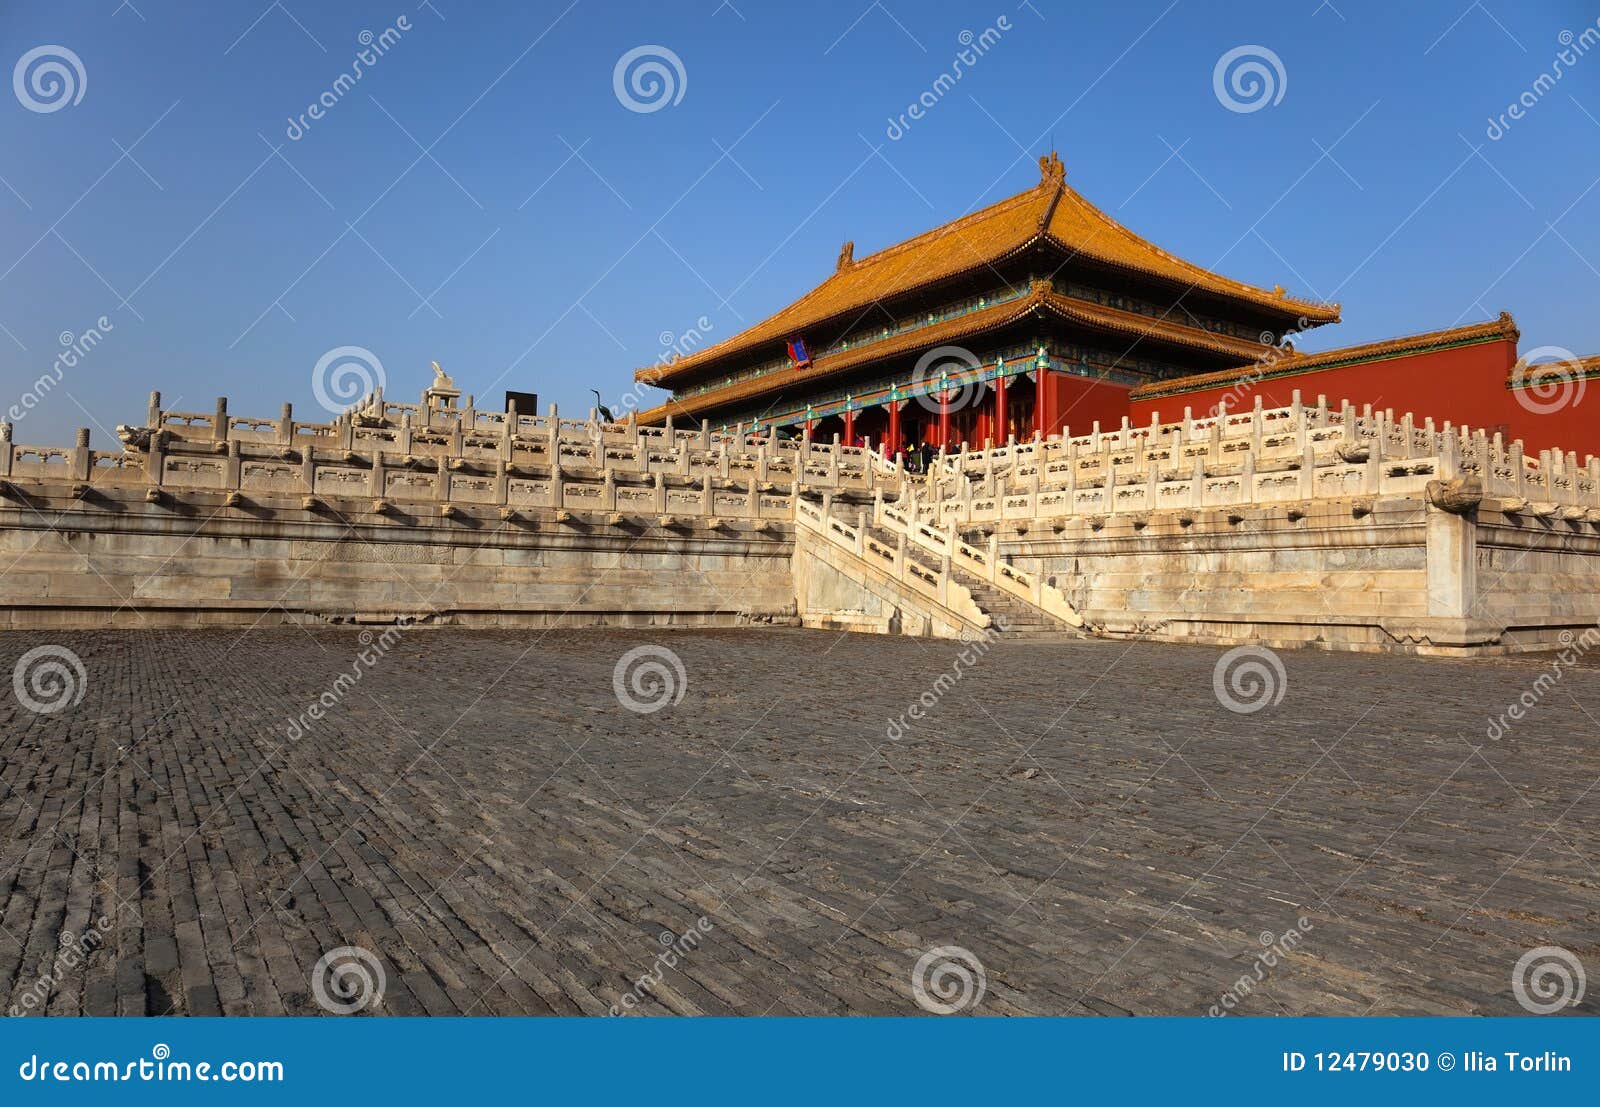 three great halls palace. forbidden city. china